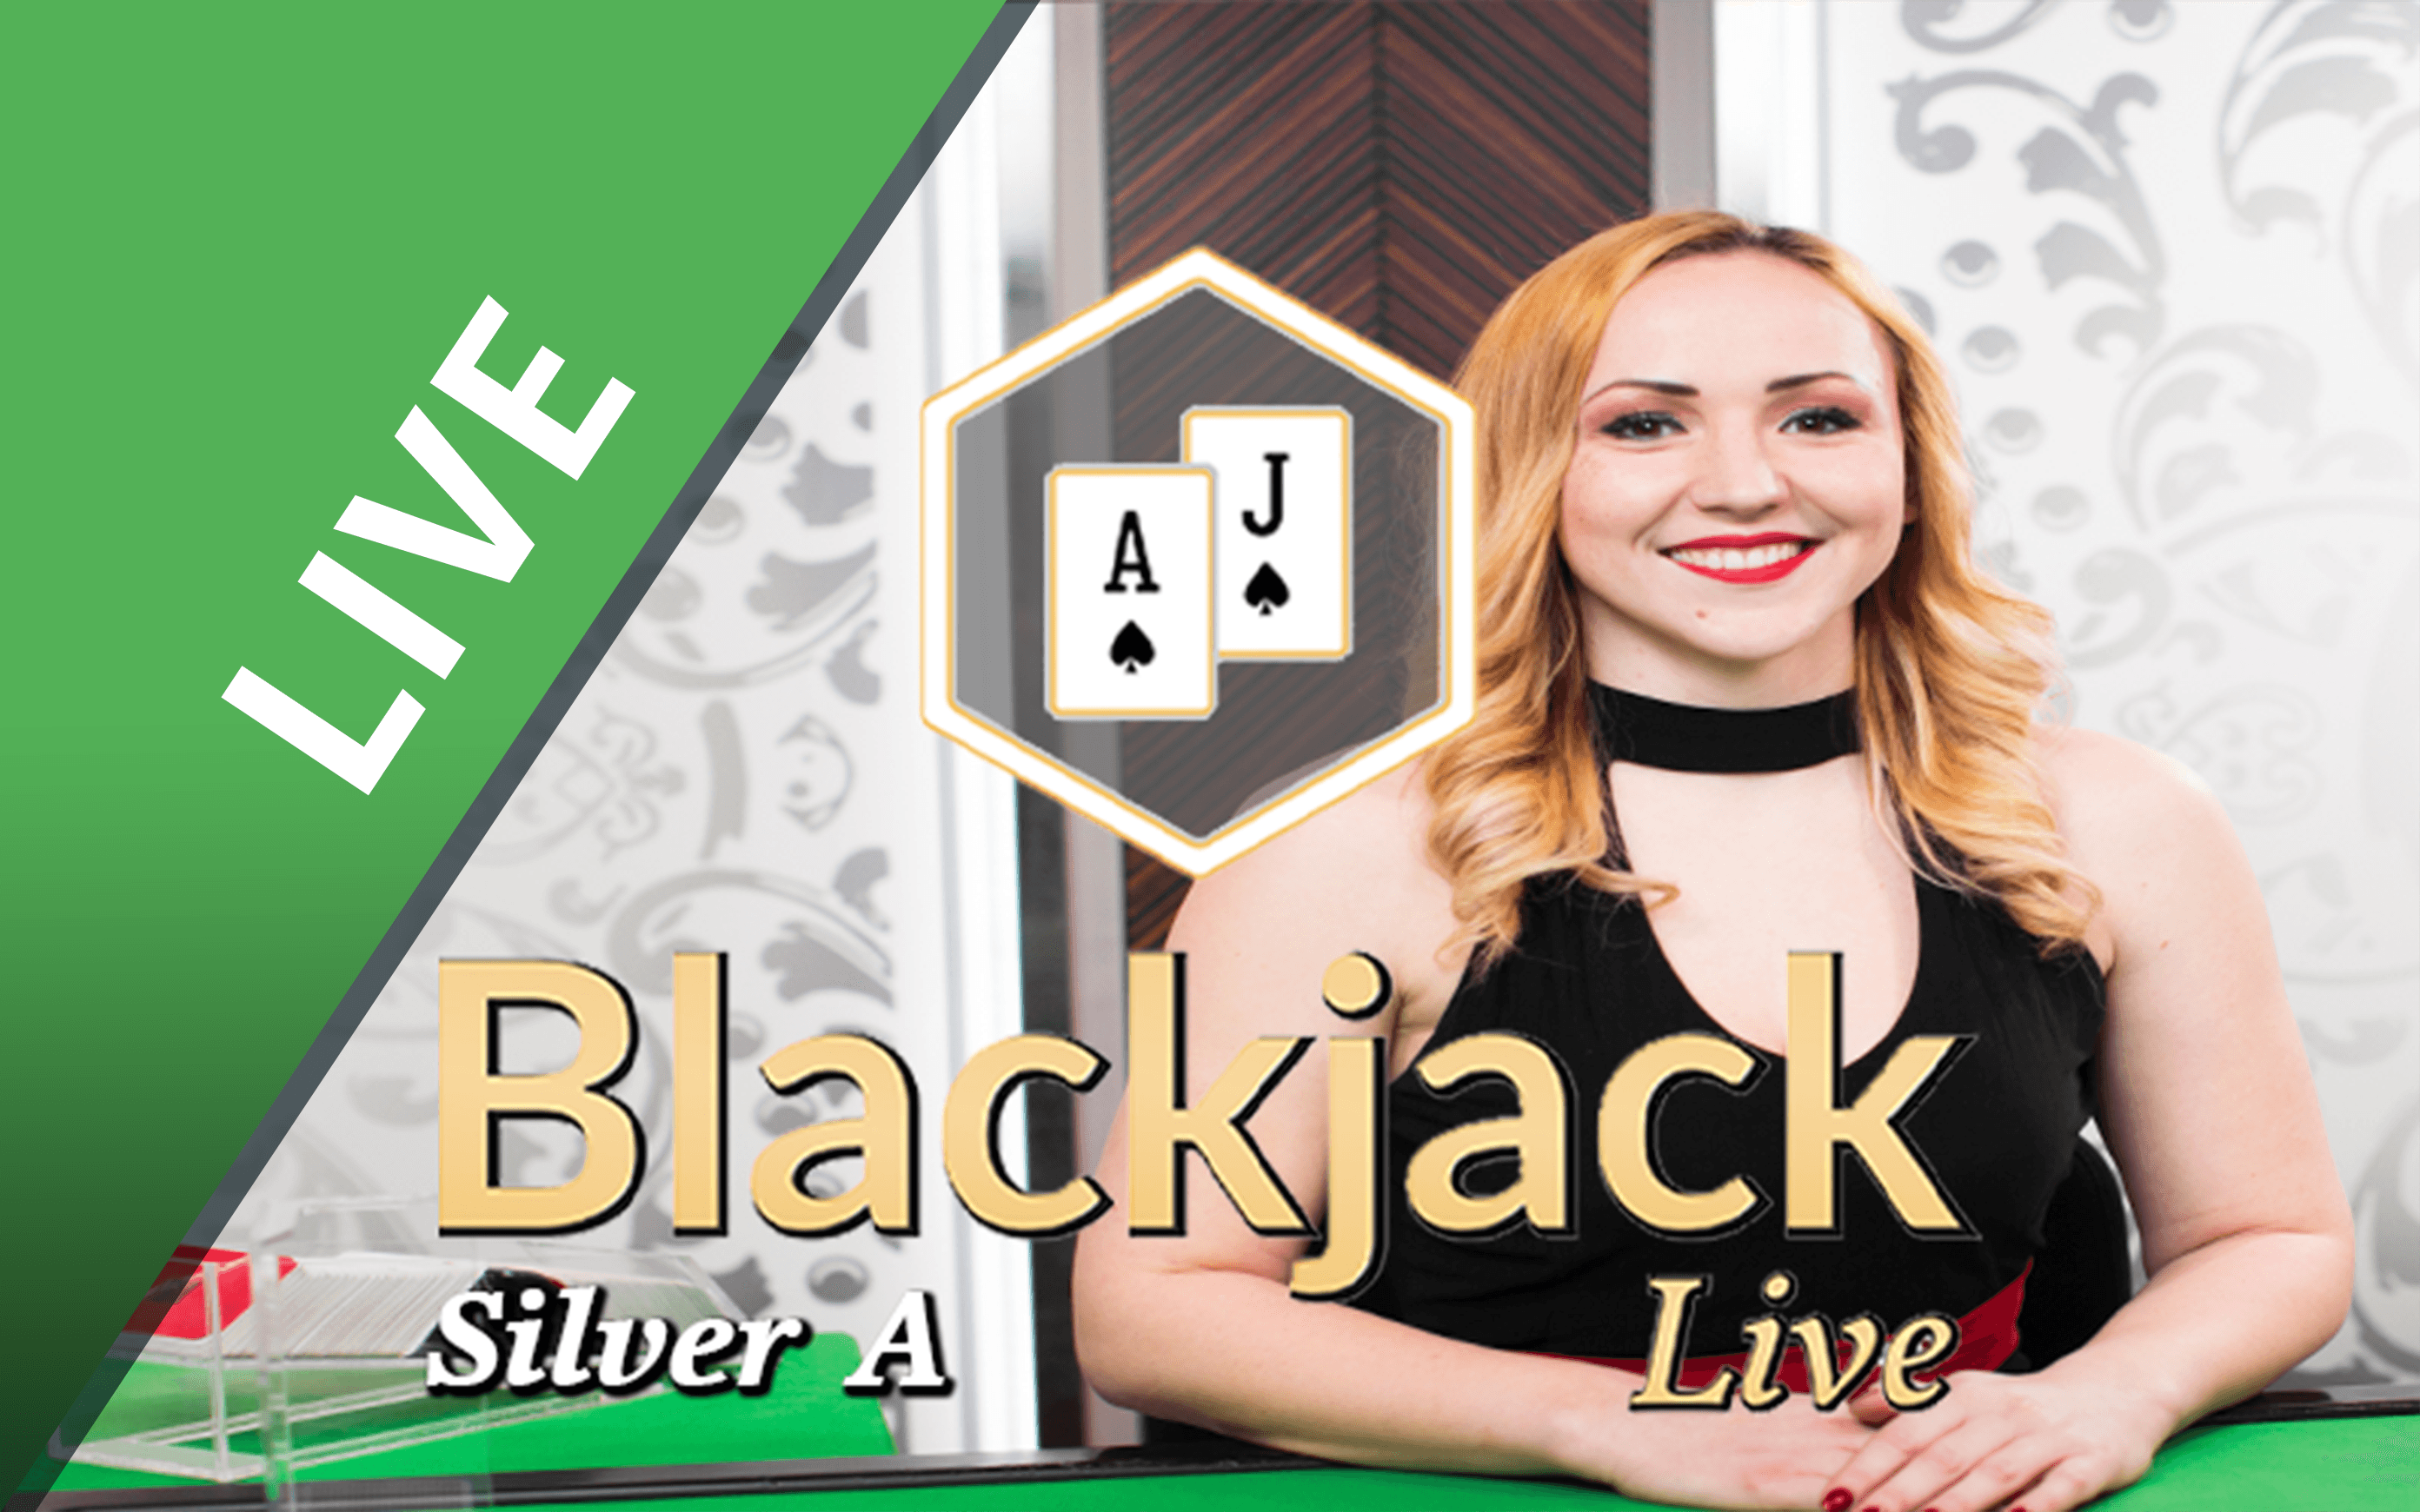 Play Blackjack Silver A on Starcasino.be online casino